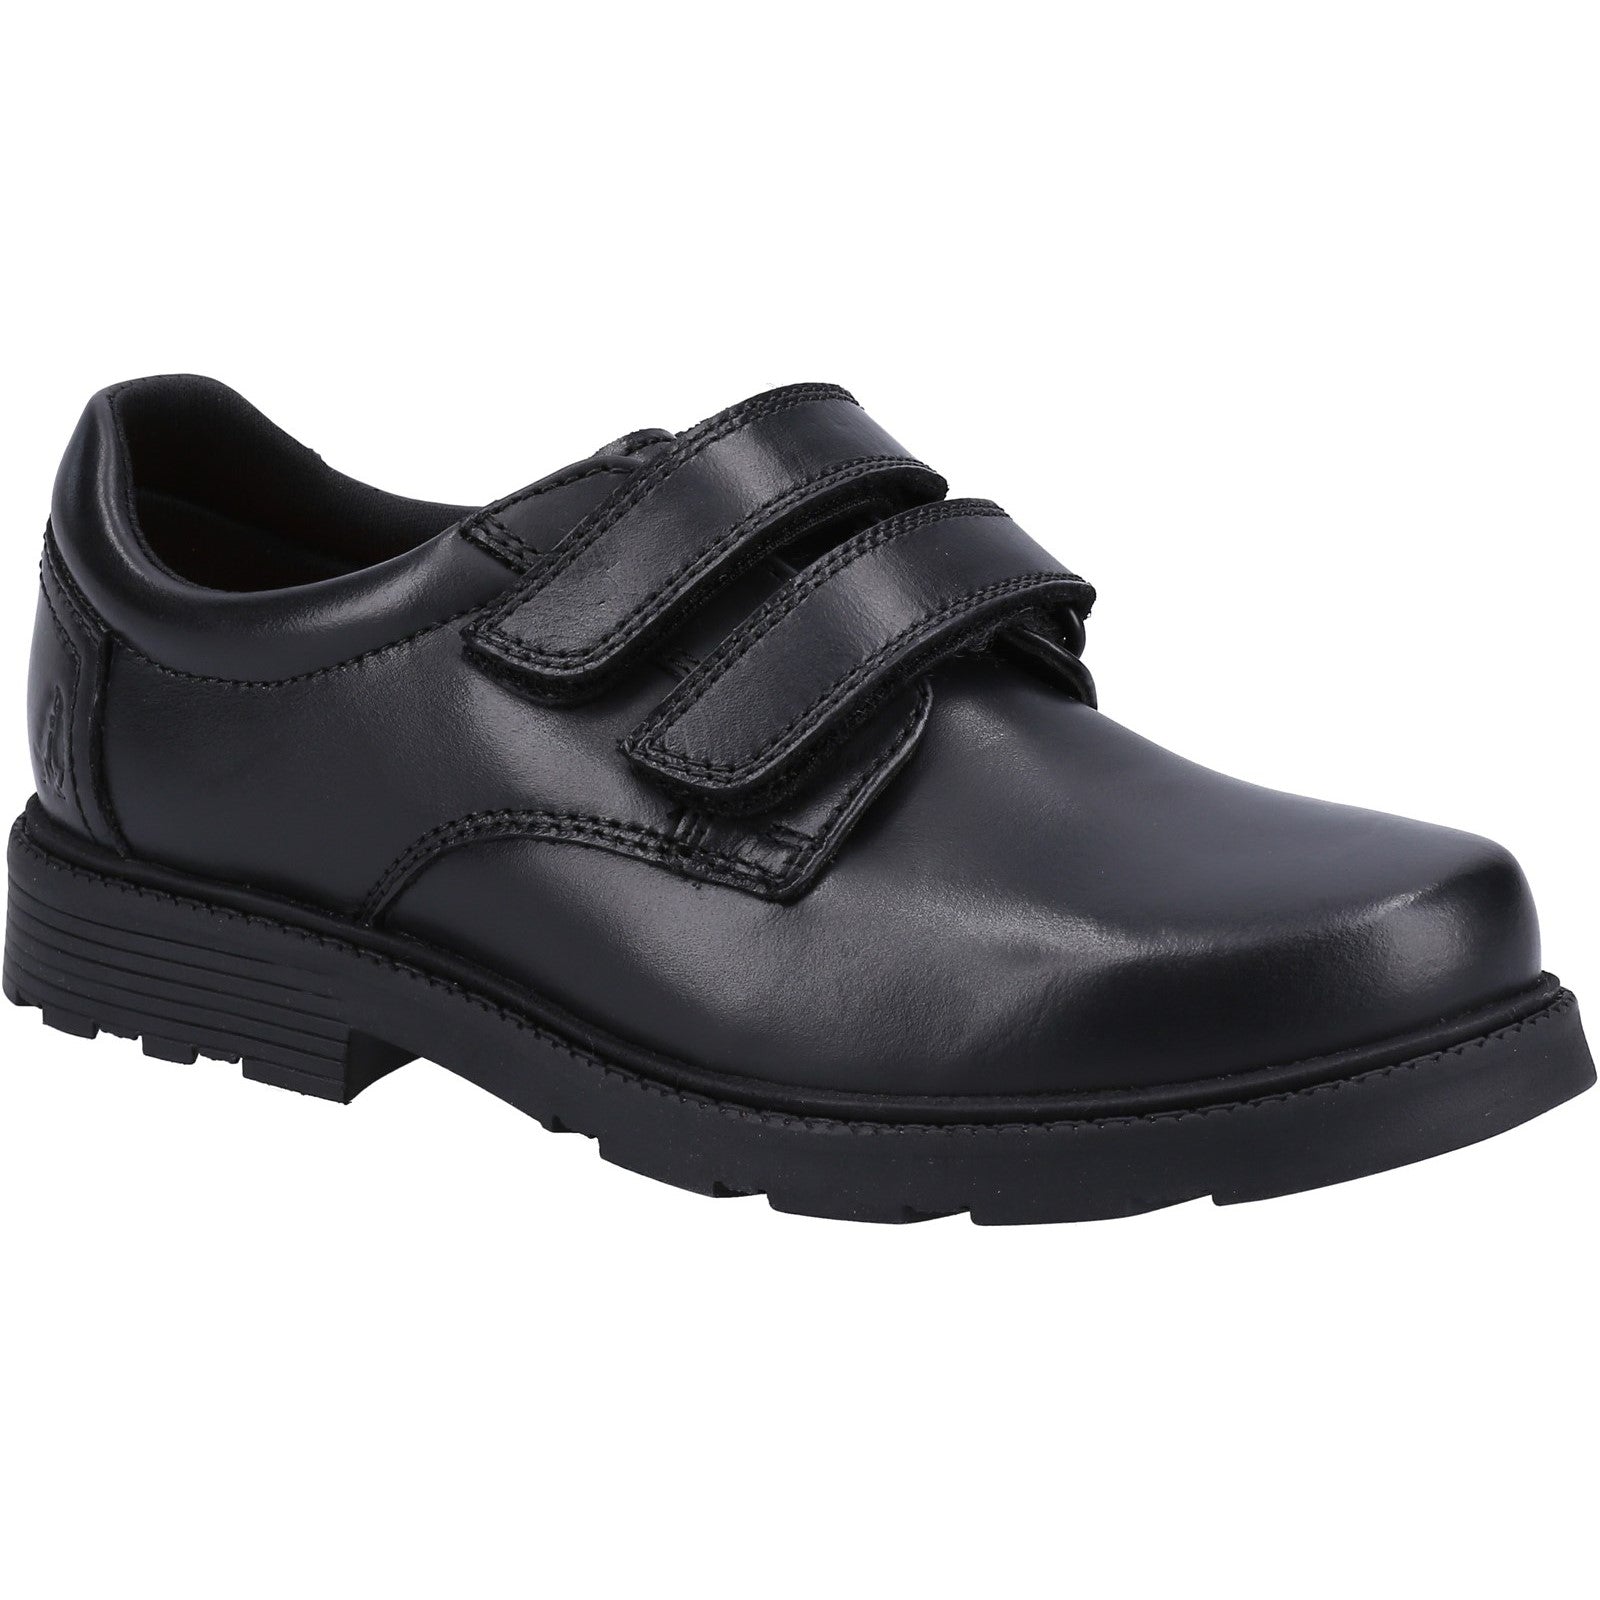 Hush Puppies Boys Logan Leather School Shoes - Black